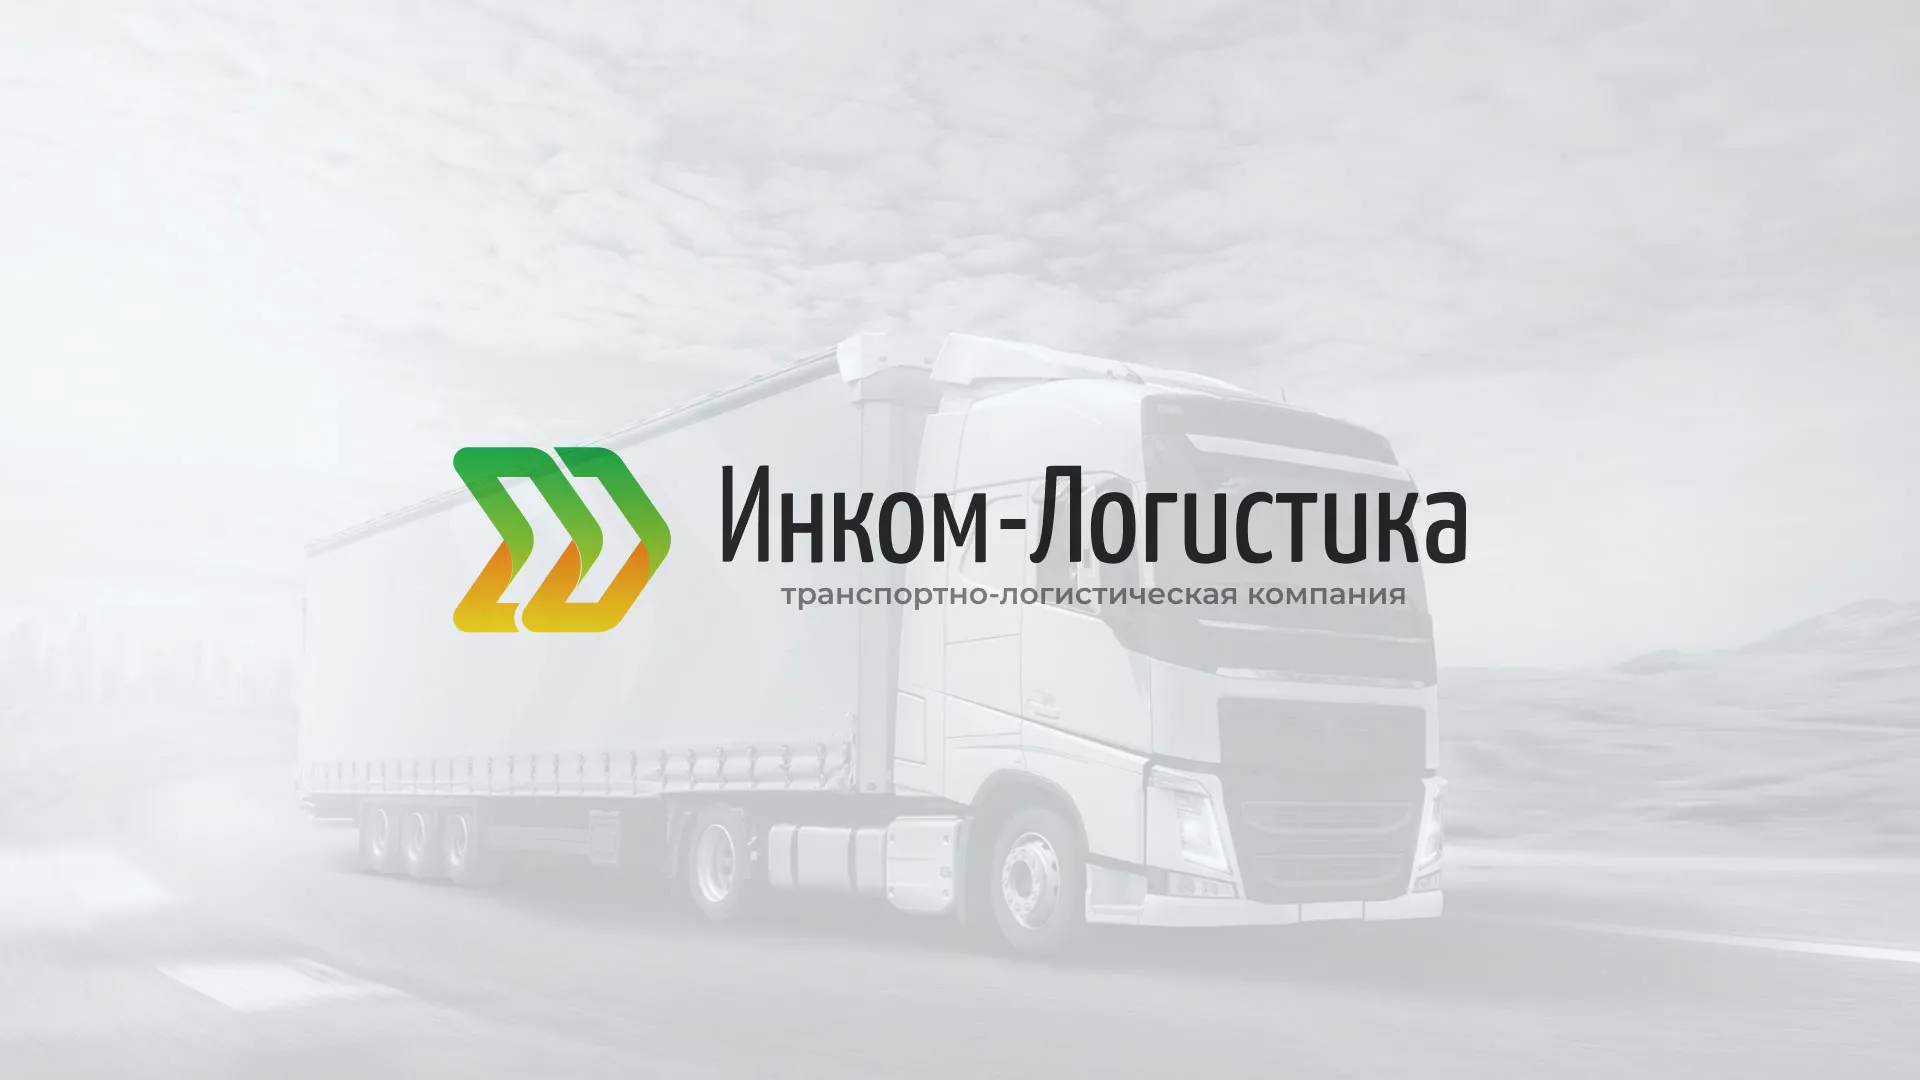 Разработка логотипа и сайта компании «Инком-Логистика» в Закаменске